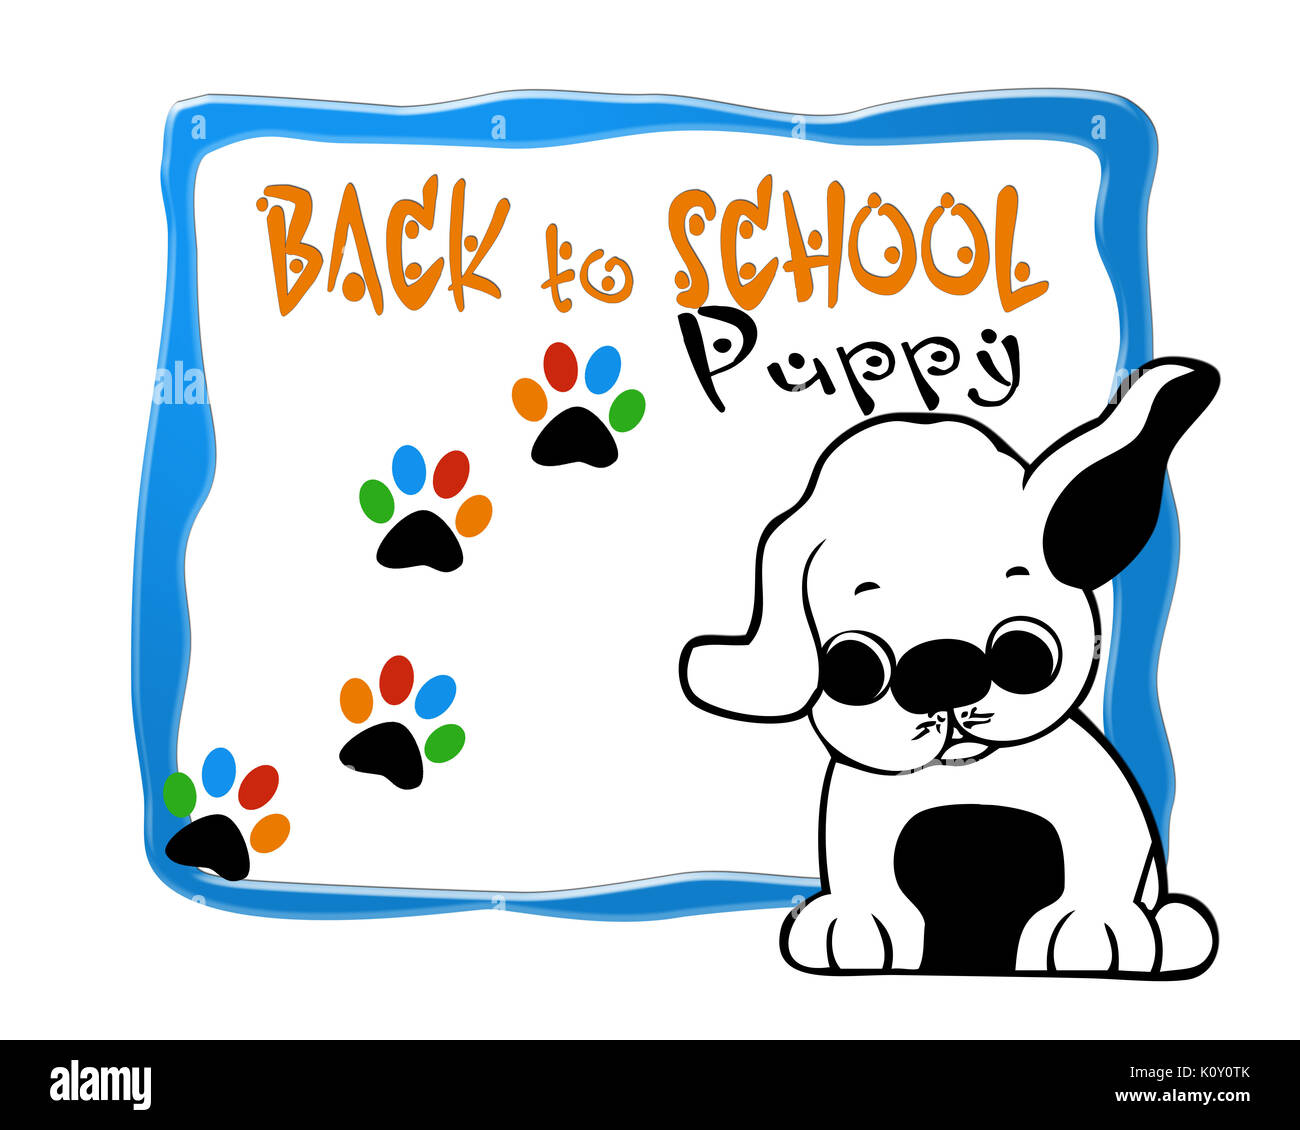 Back to puppy school logo background image Stock Photo